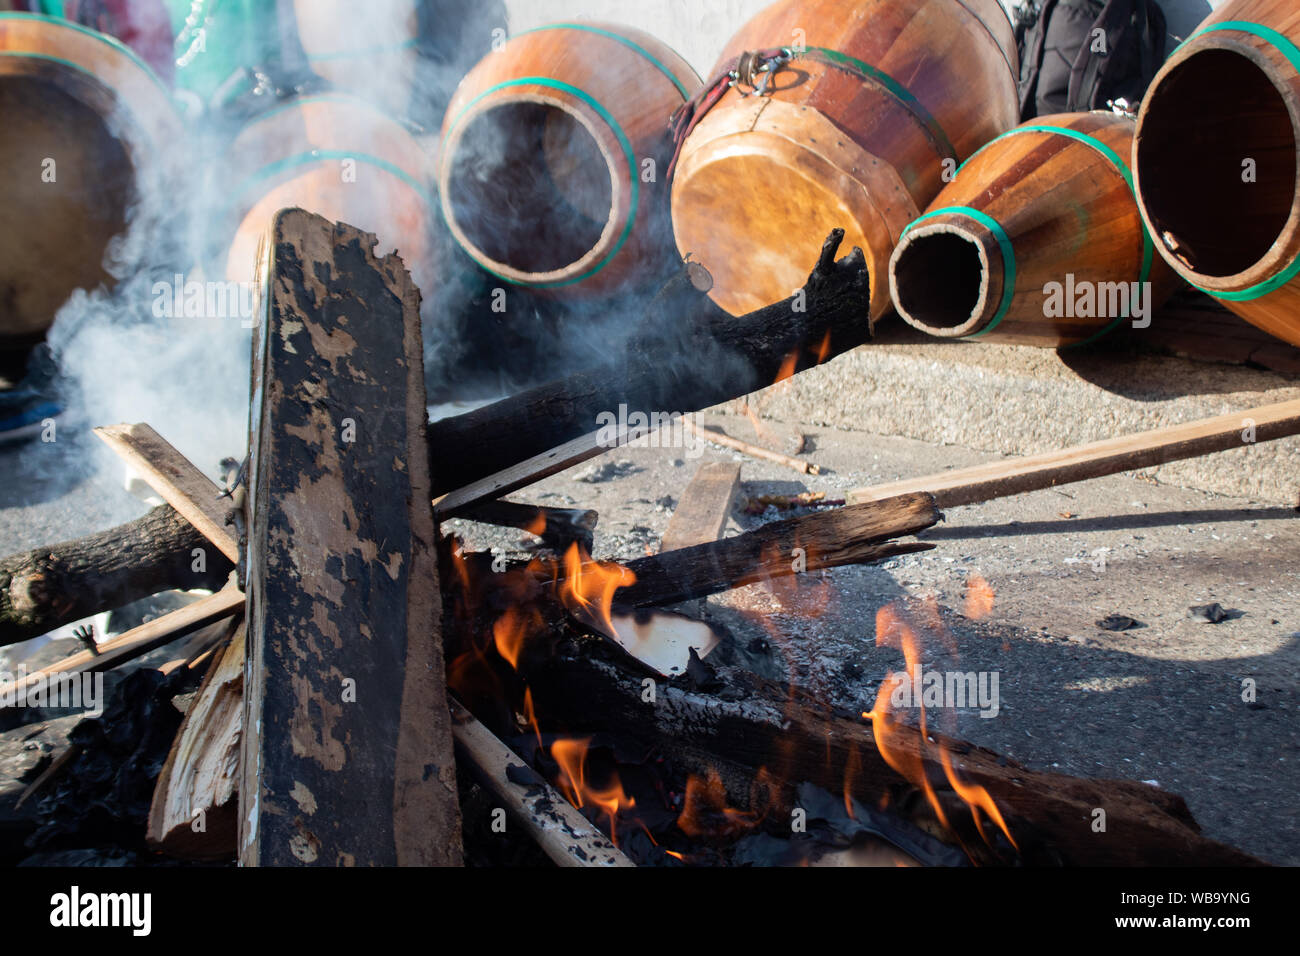 Fuego para calentar tambores africanos Stock Photo